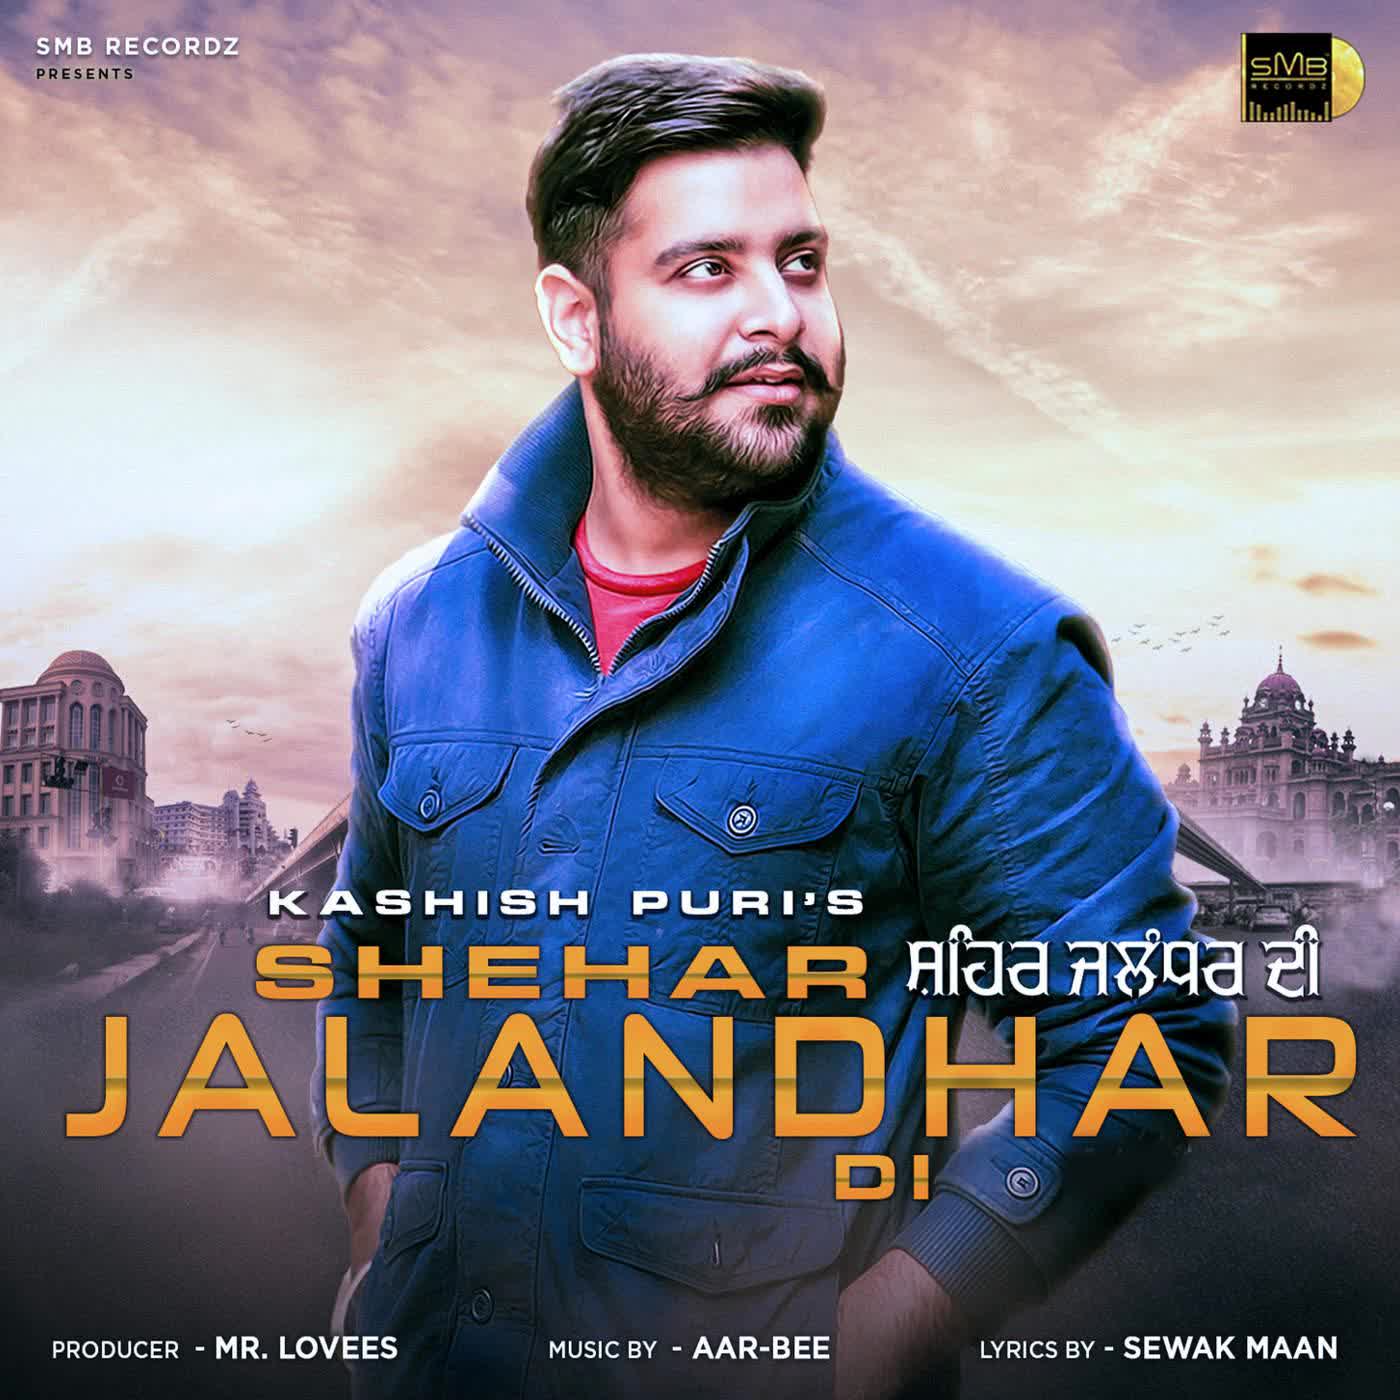 Shehar Jalandhar Di Kashish Puri  Mp3 song download